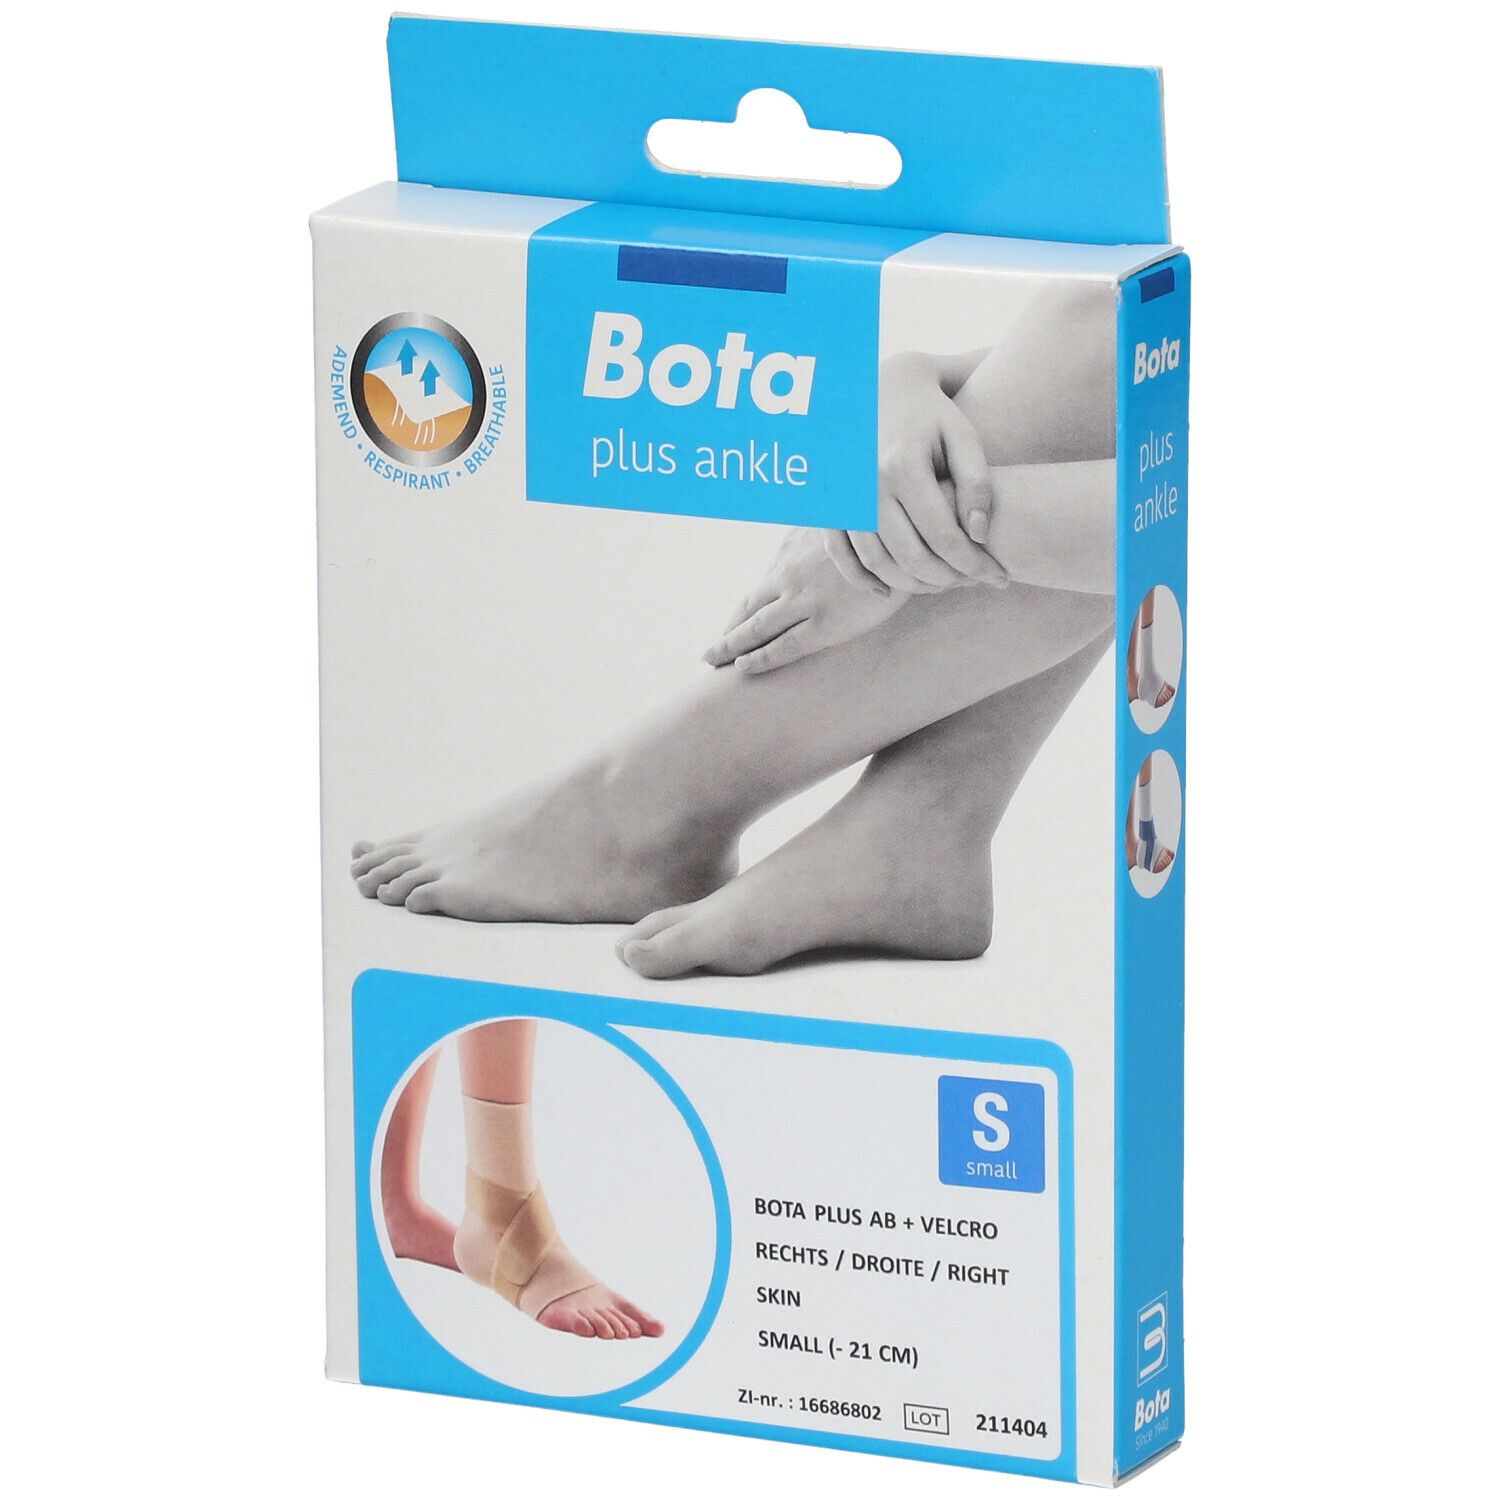 Bota Plus AB Cheville + Velcro Droite Skin Small